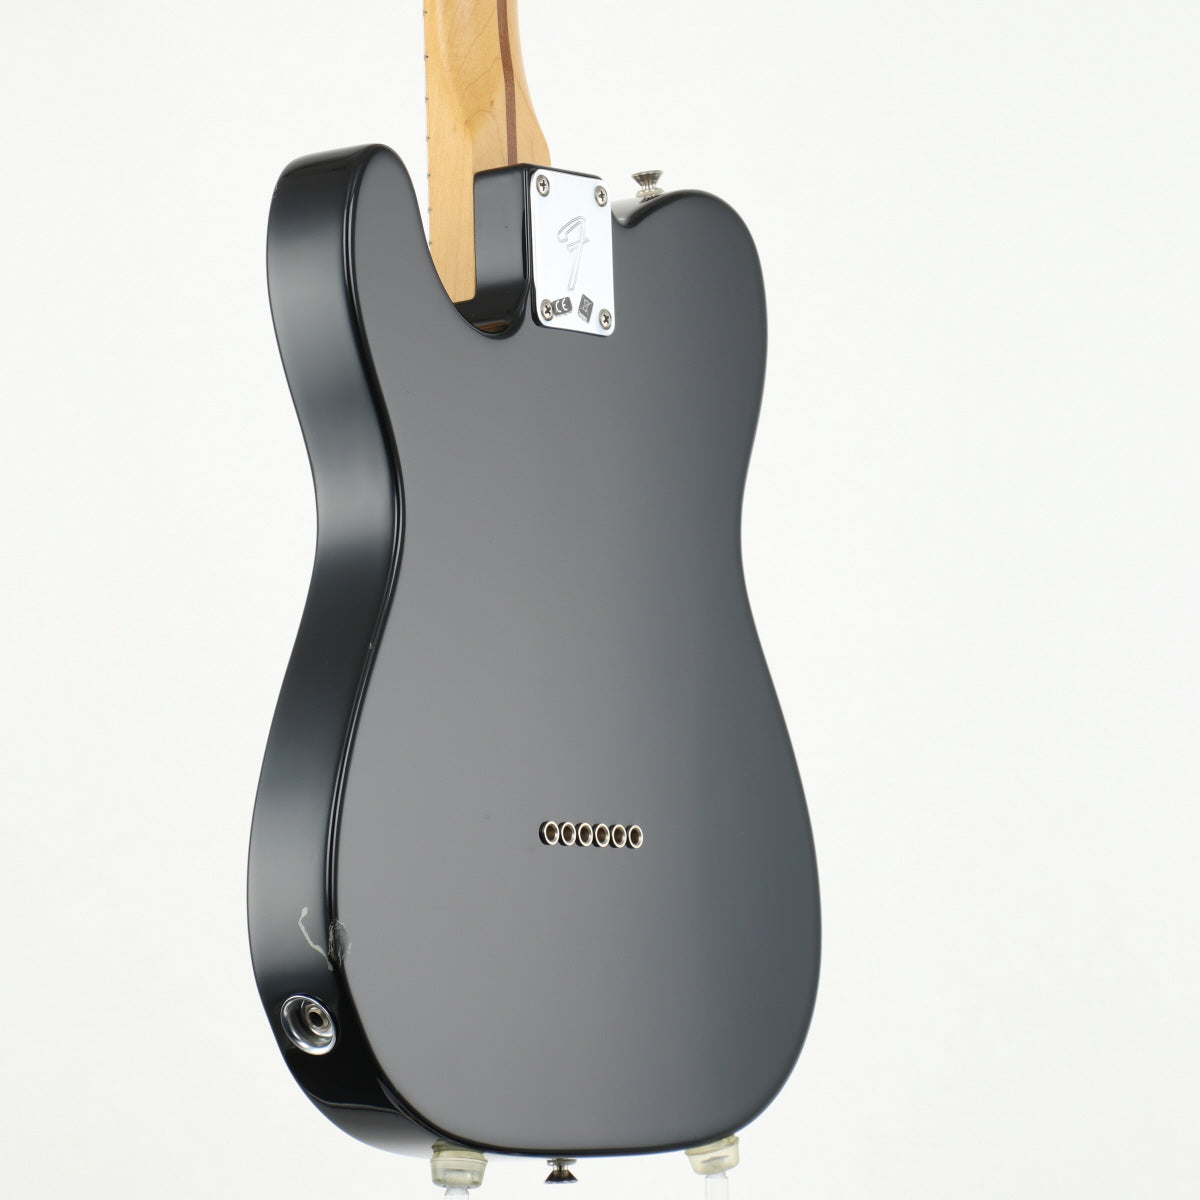 [SN MX20106893] USED Fender / Player Telecaster Black / Maple Fingerboard [12]